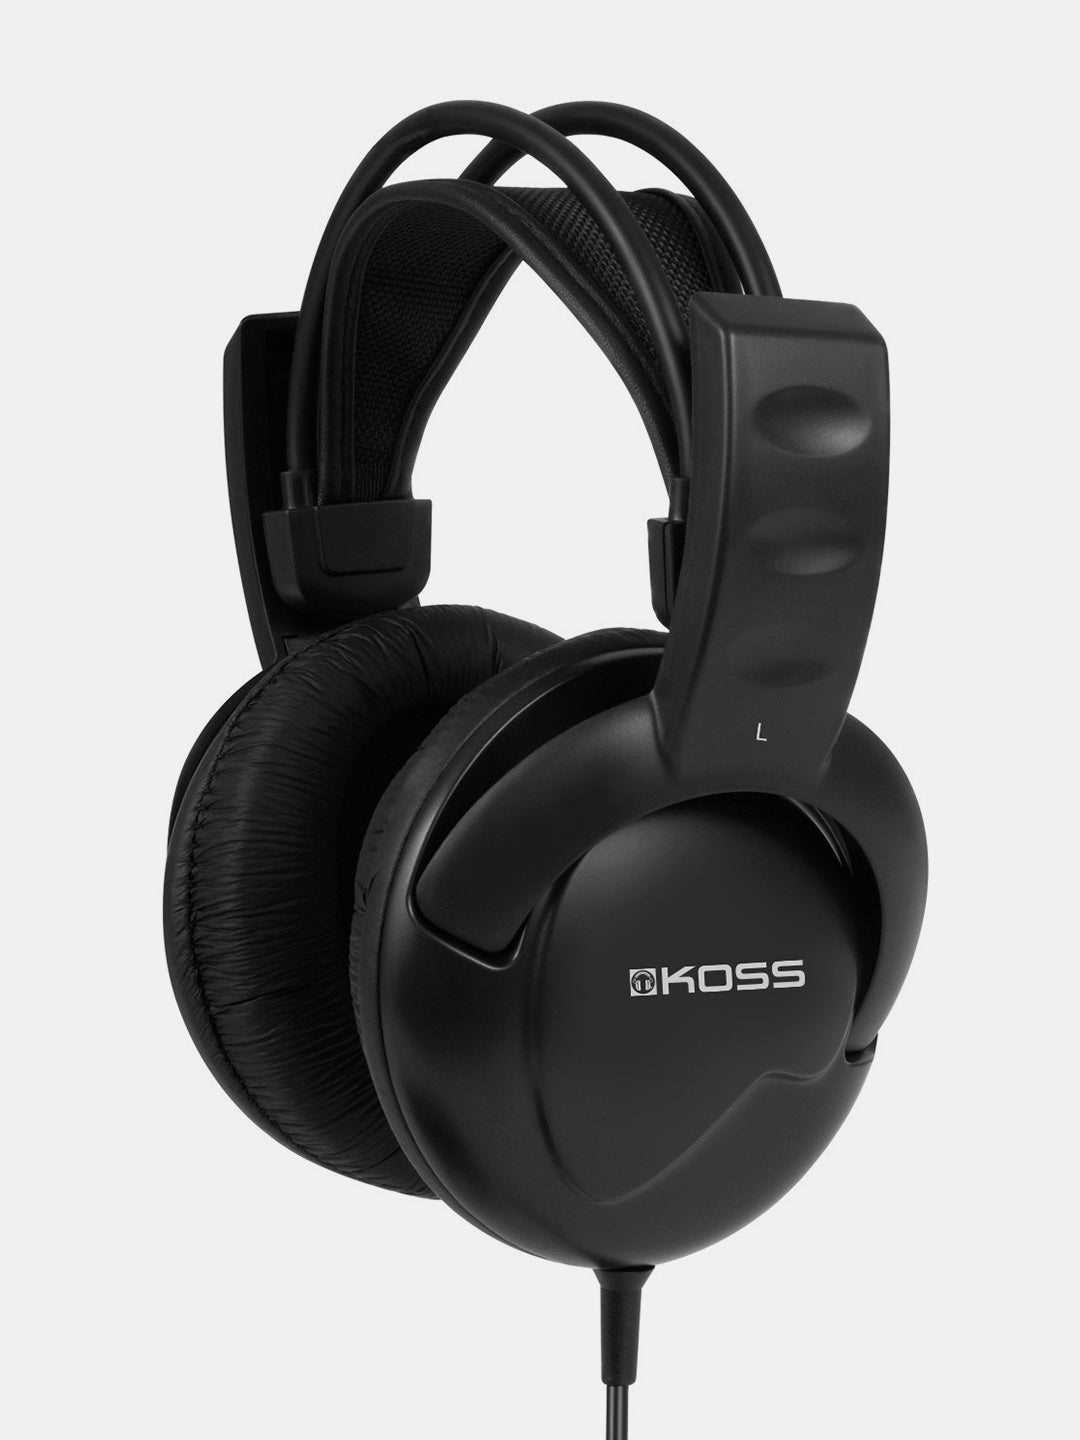  Koss Porta Pro Classic On-Ear Headphones, Retro Style, 3.5mm  Wired Plug, Durable, Black/Silver : Electronics